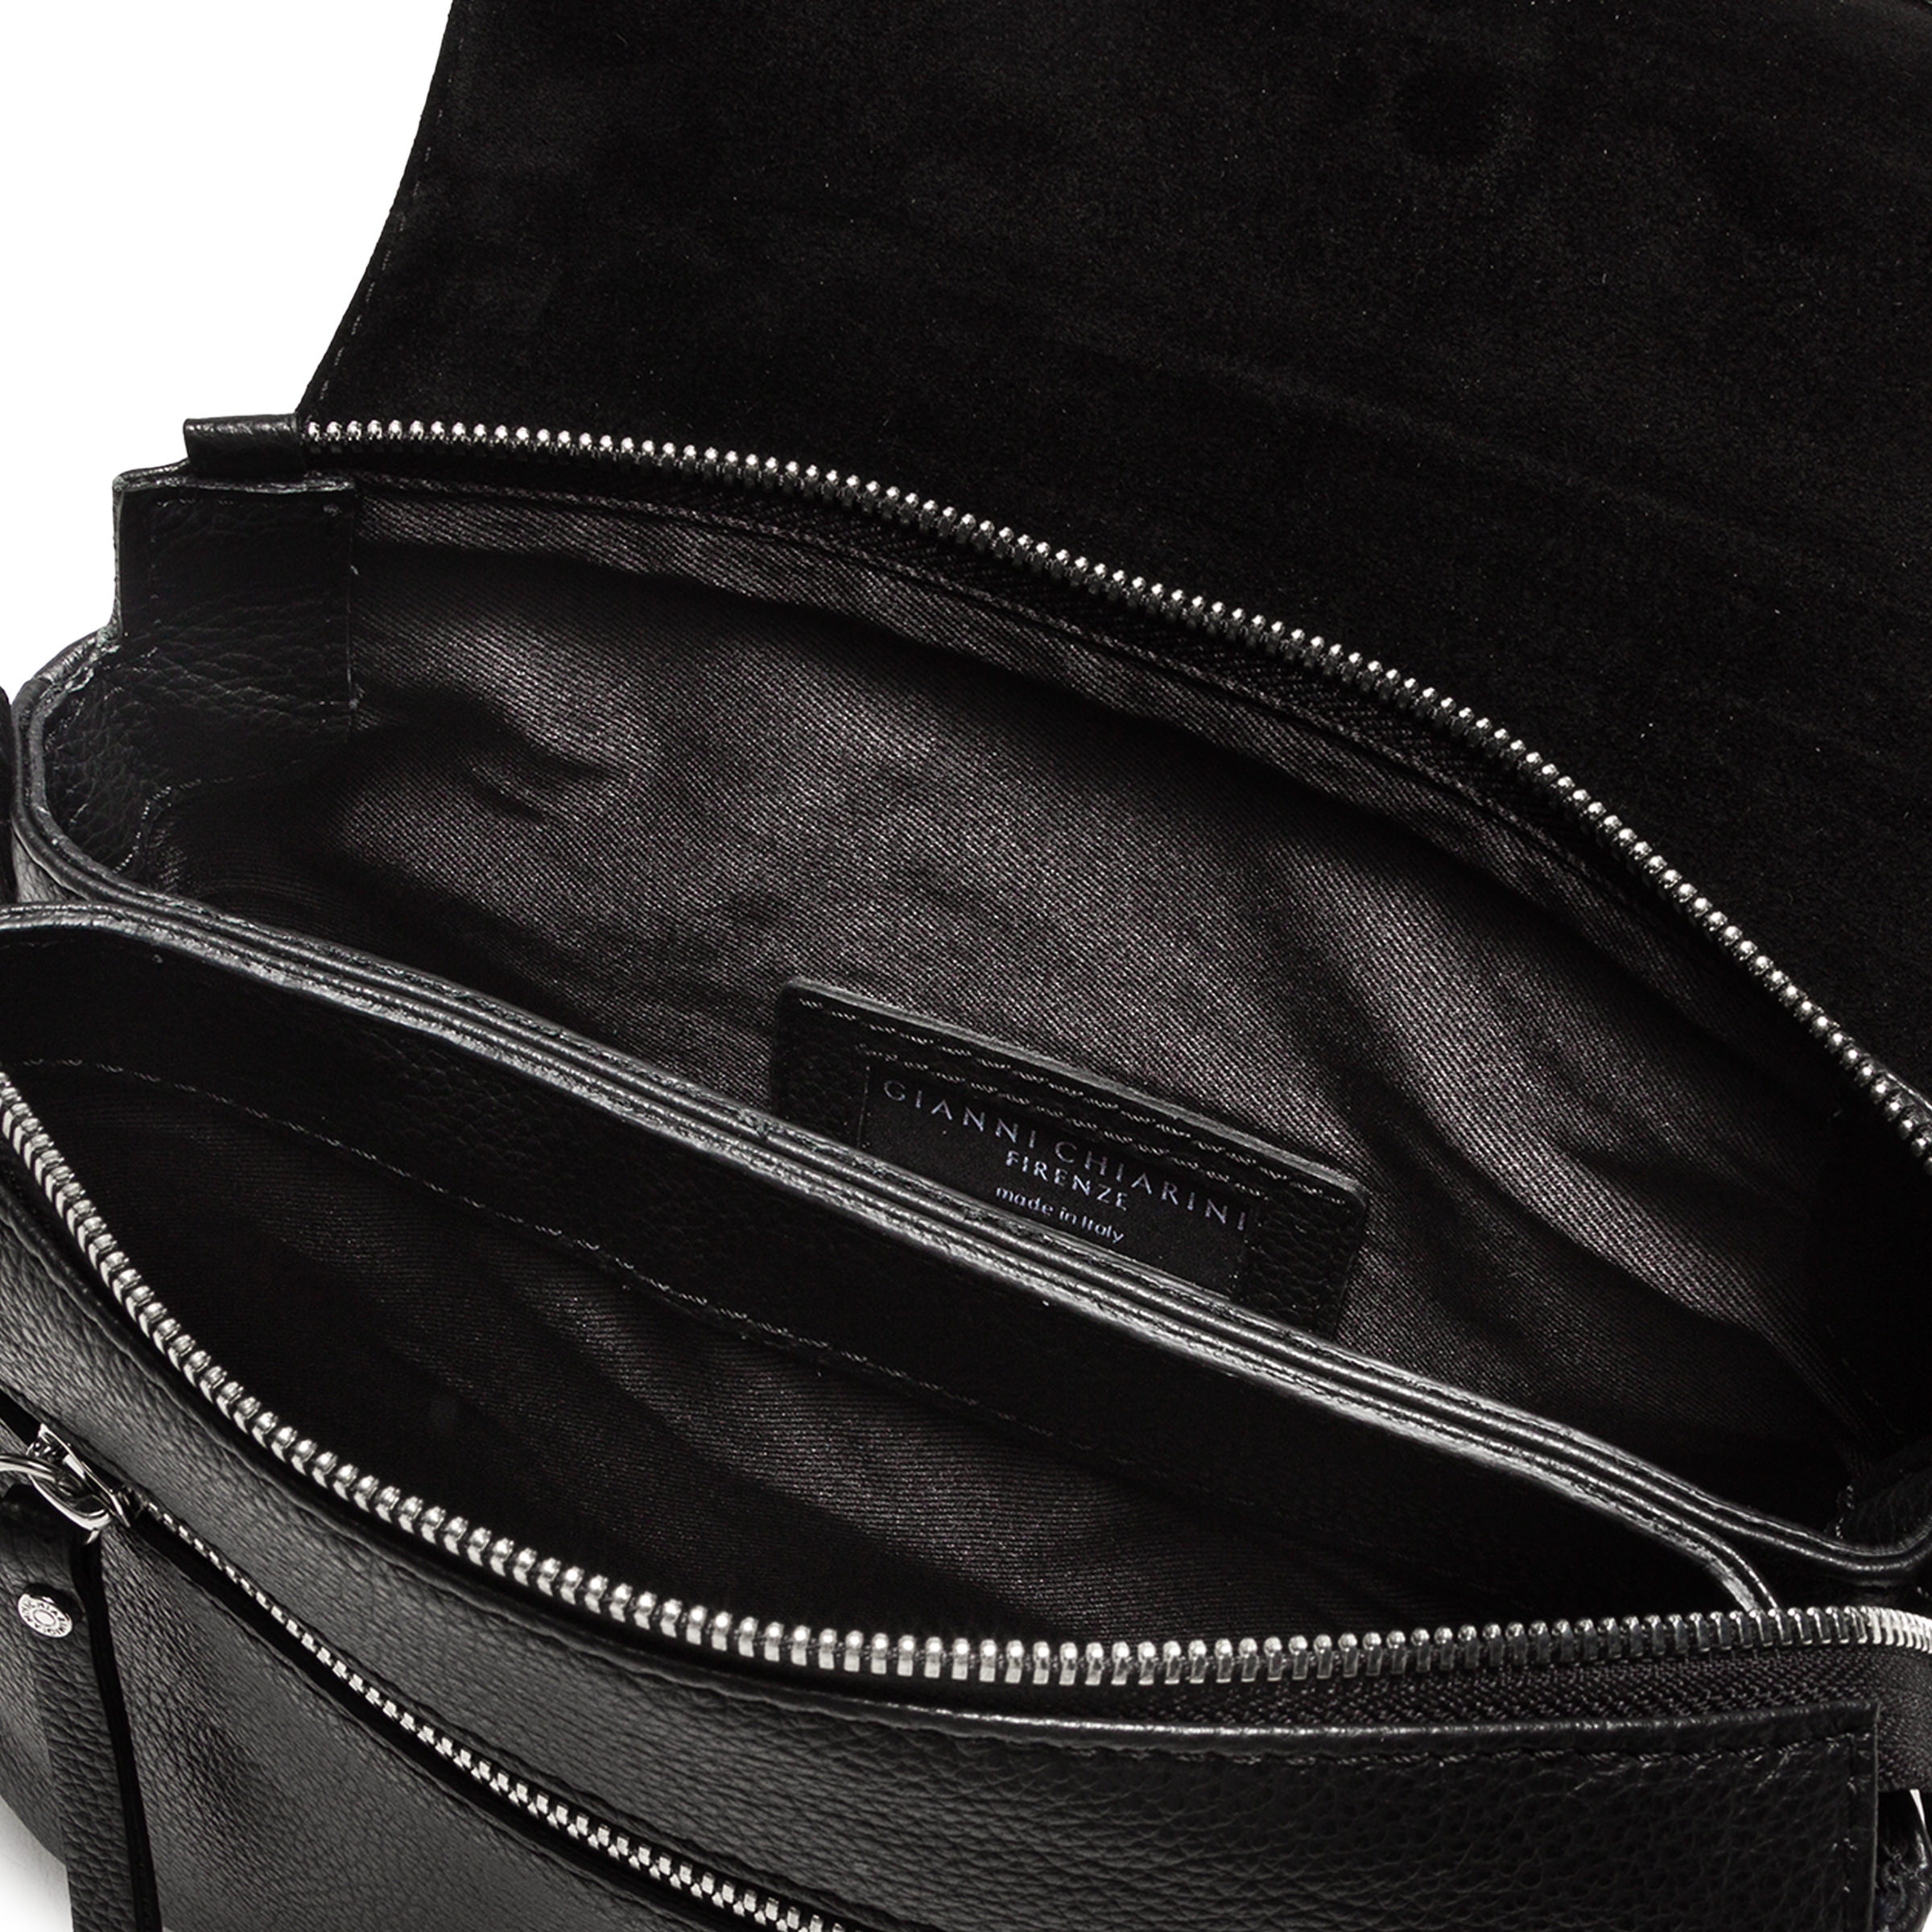 Gianni Chiarini - Three leather bag, Black, large image number 4